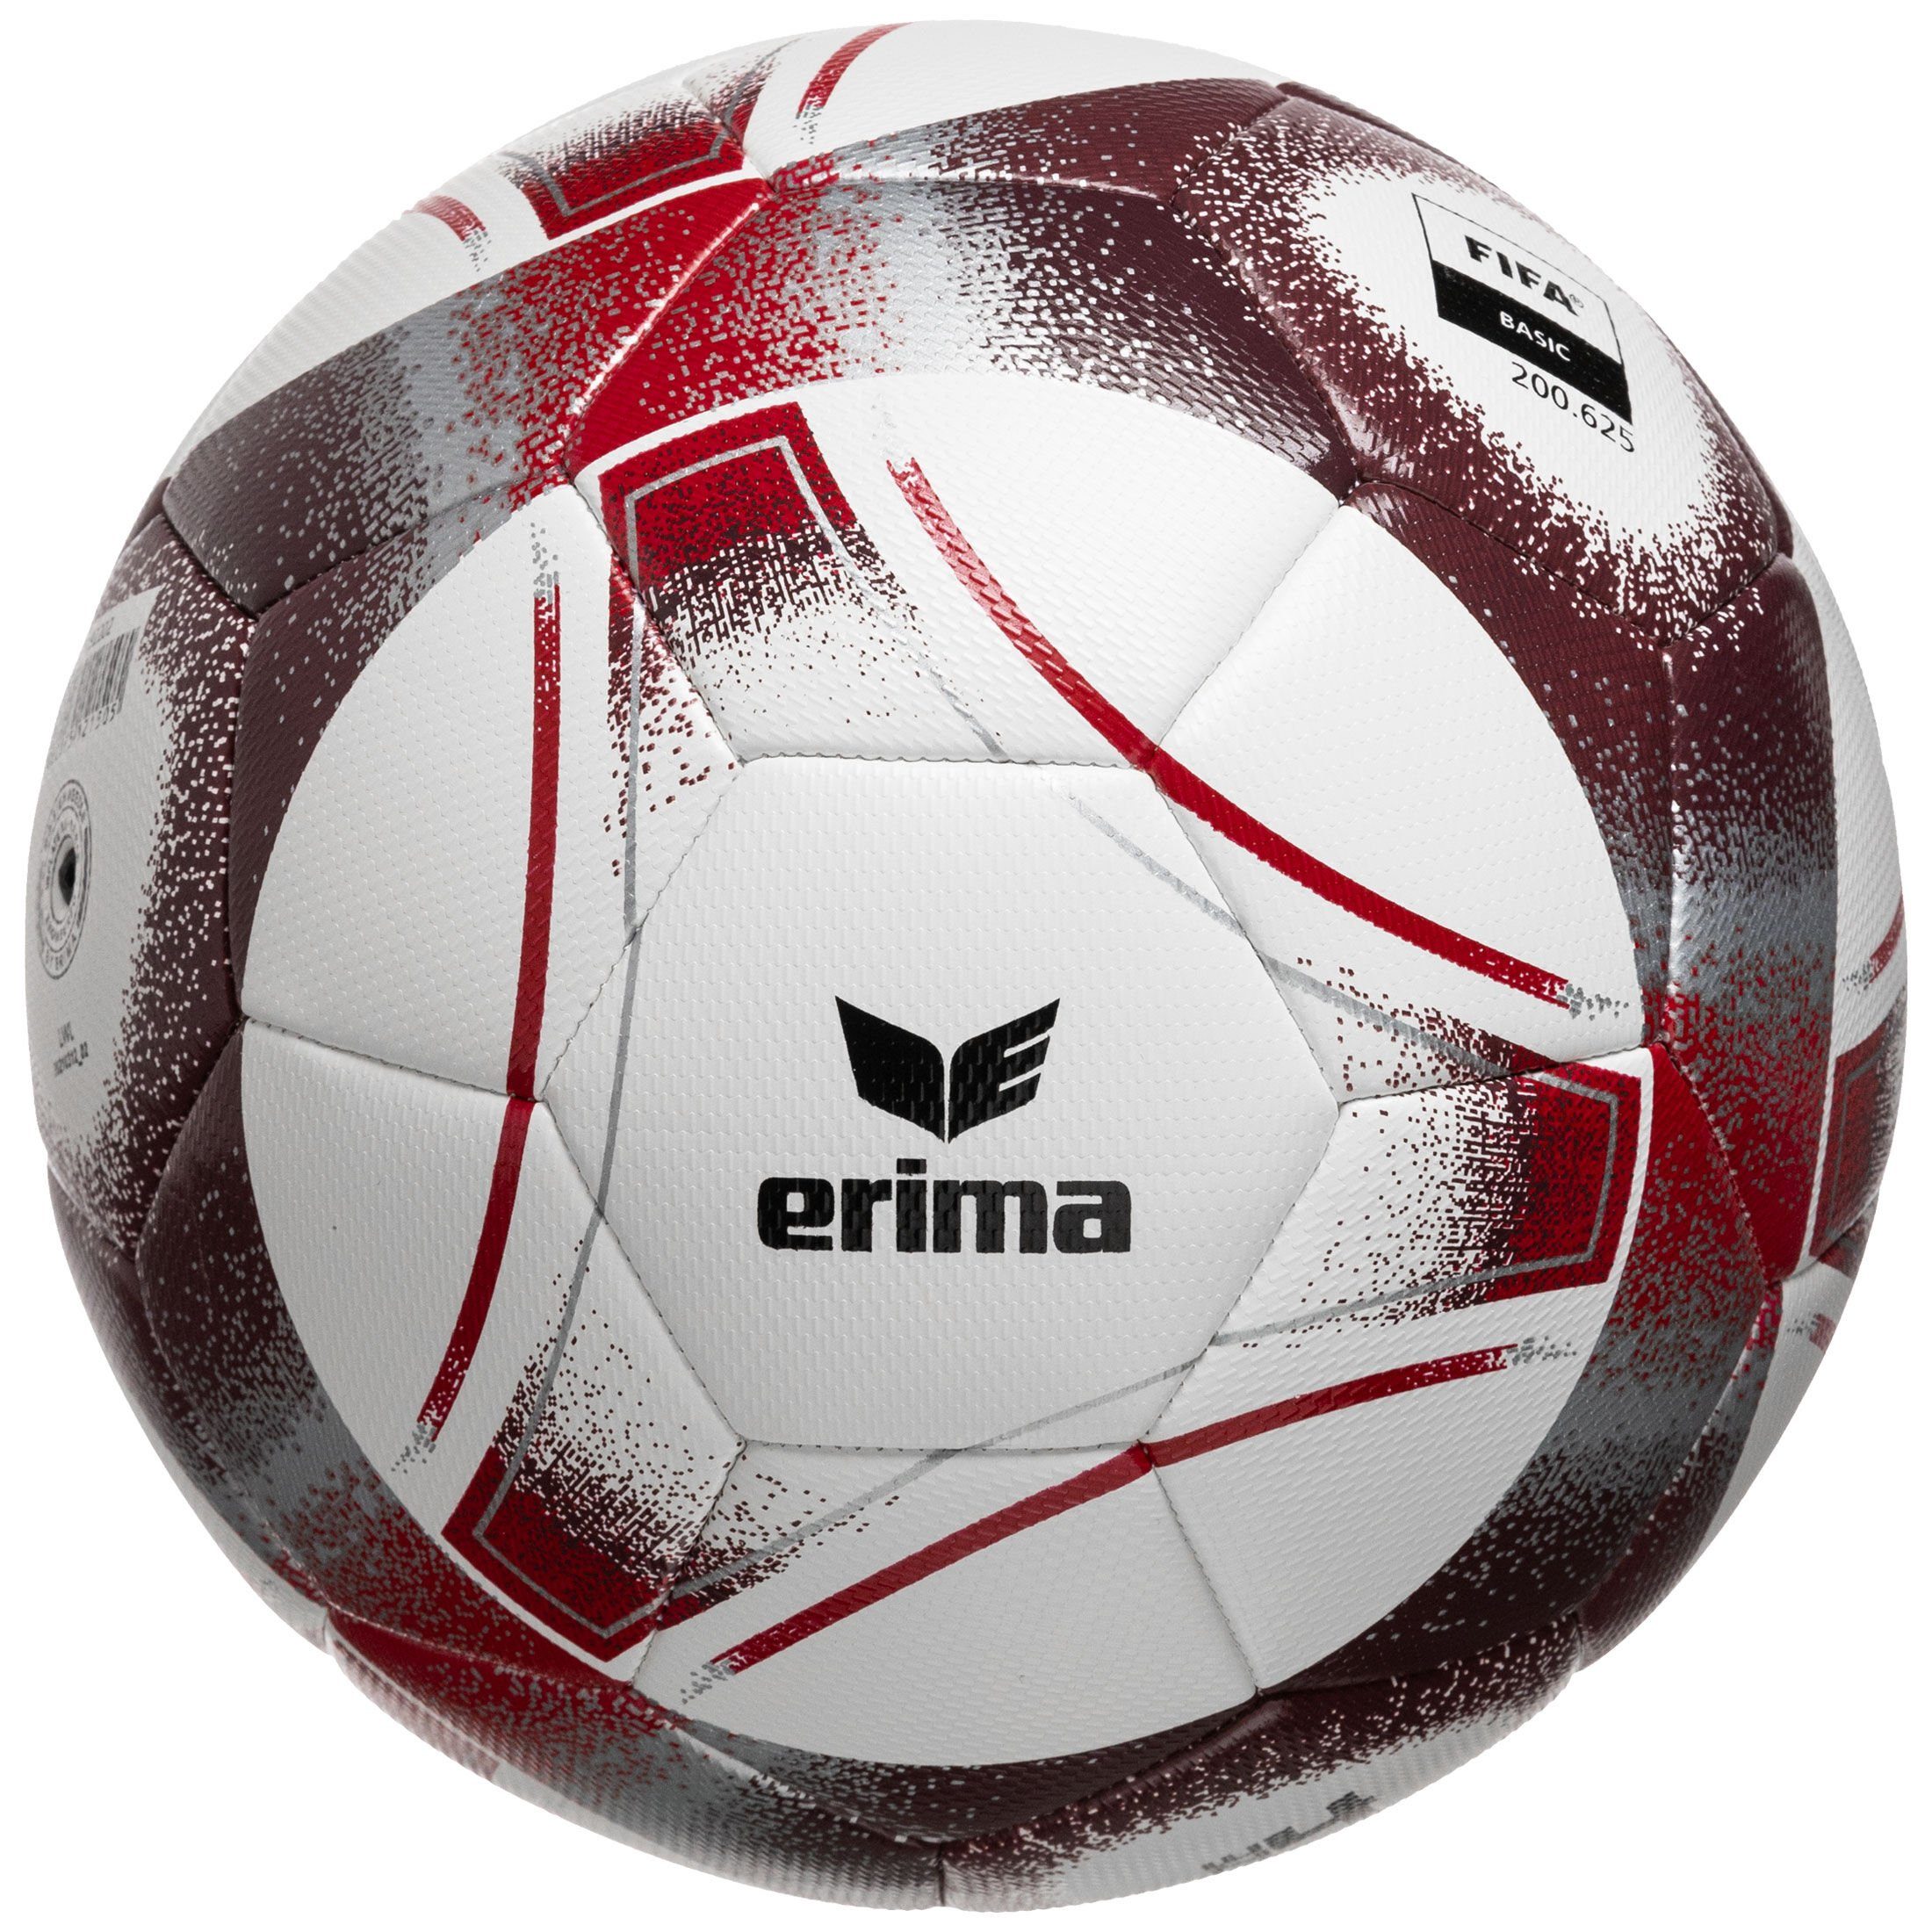 Fußball Fußball Hybrid Training rot bordeaux / Erima